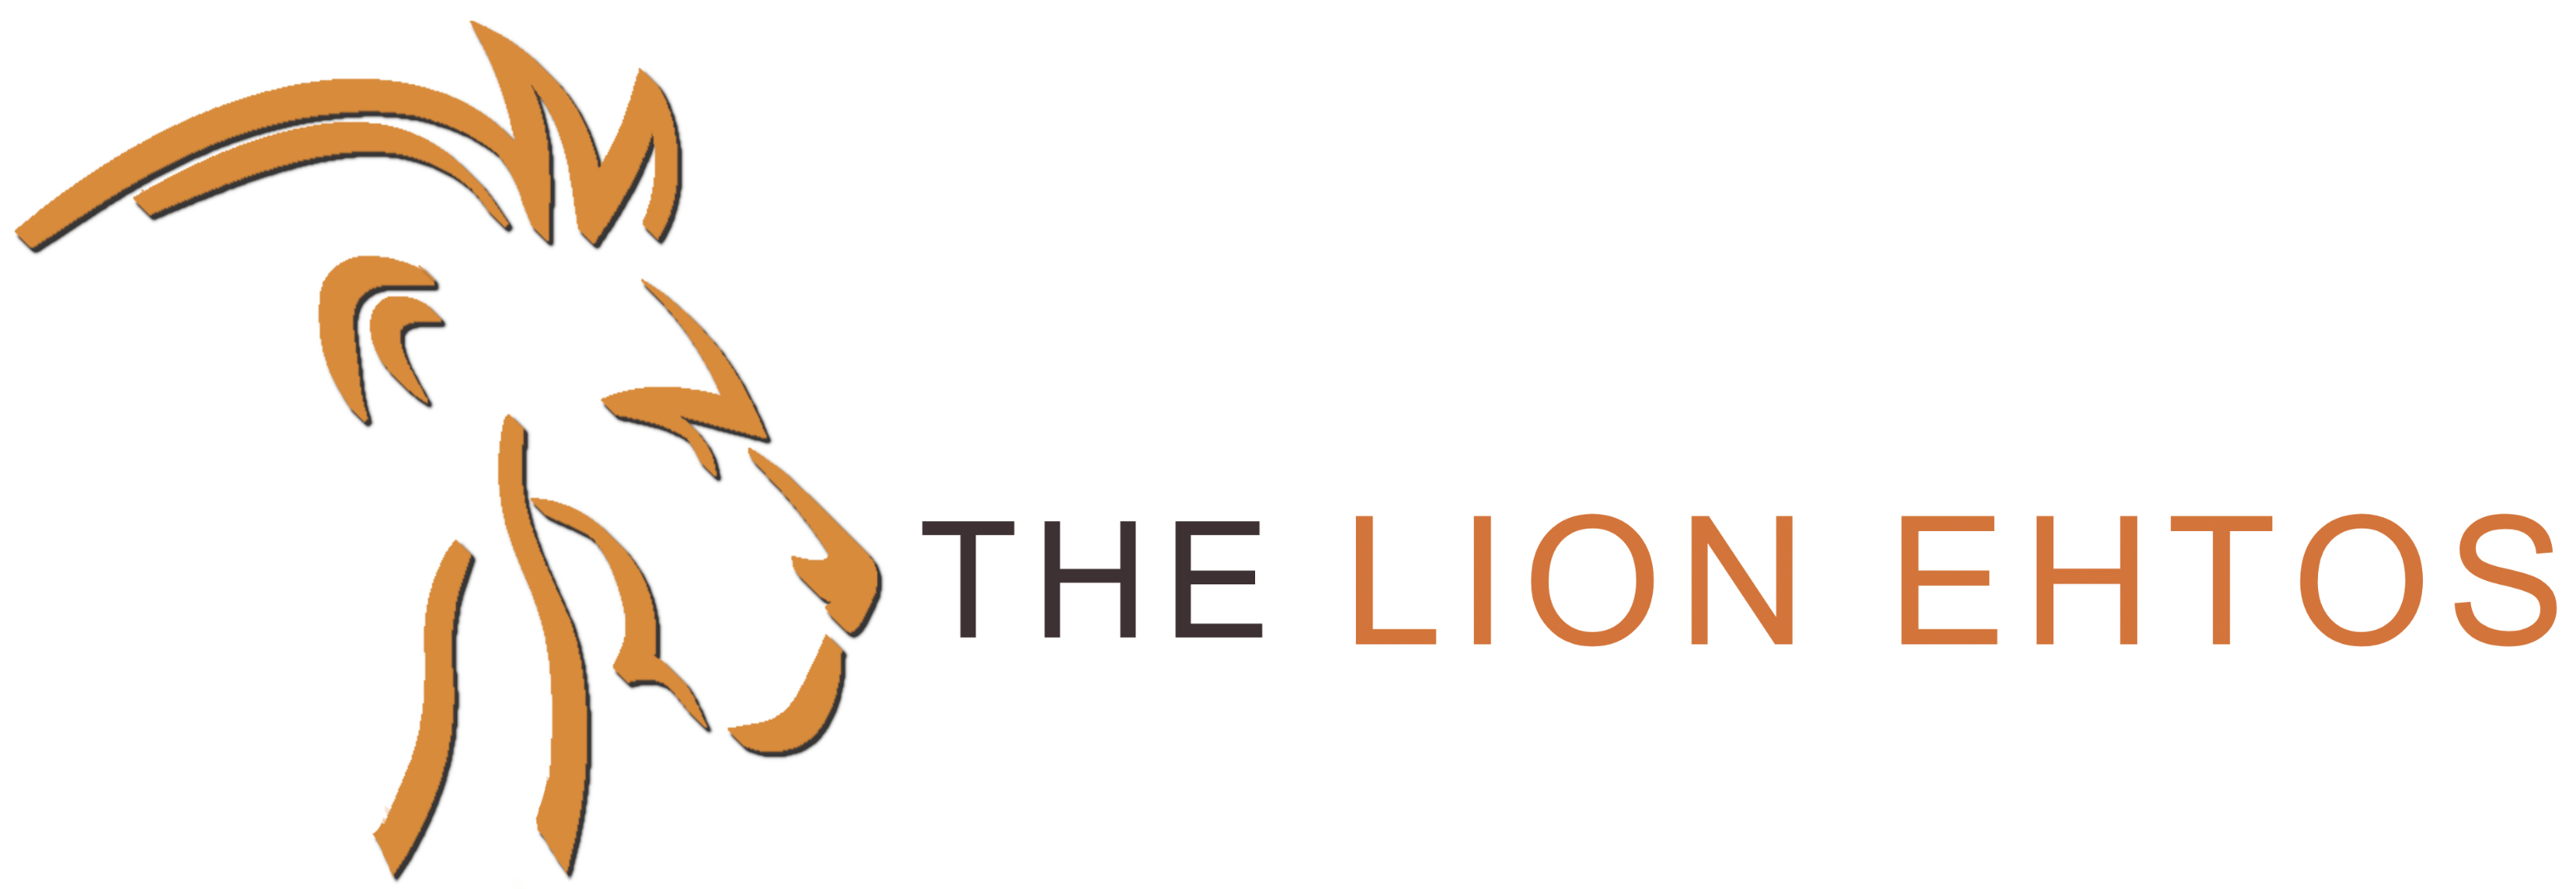 THE LION ETHOS logo